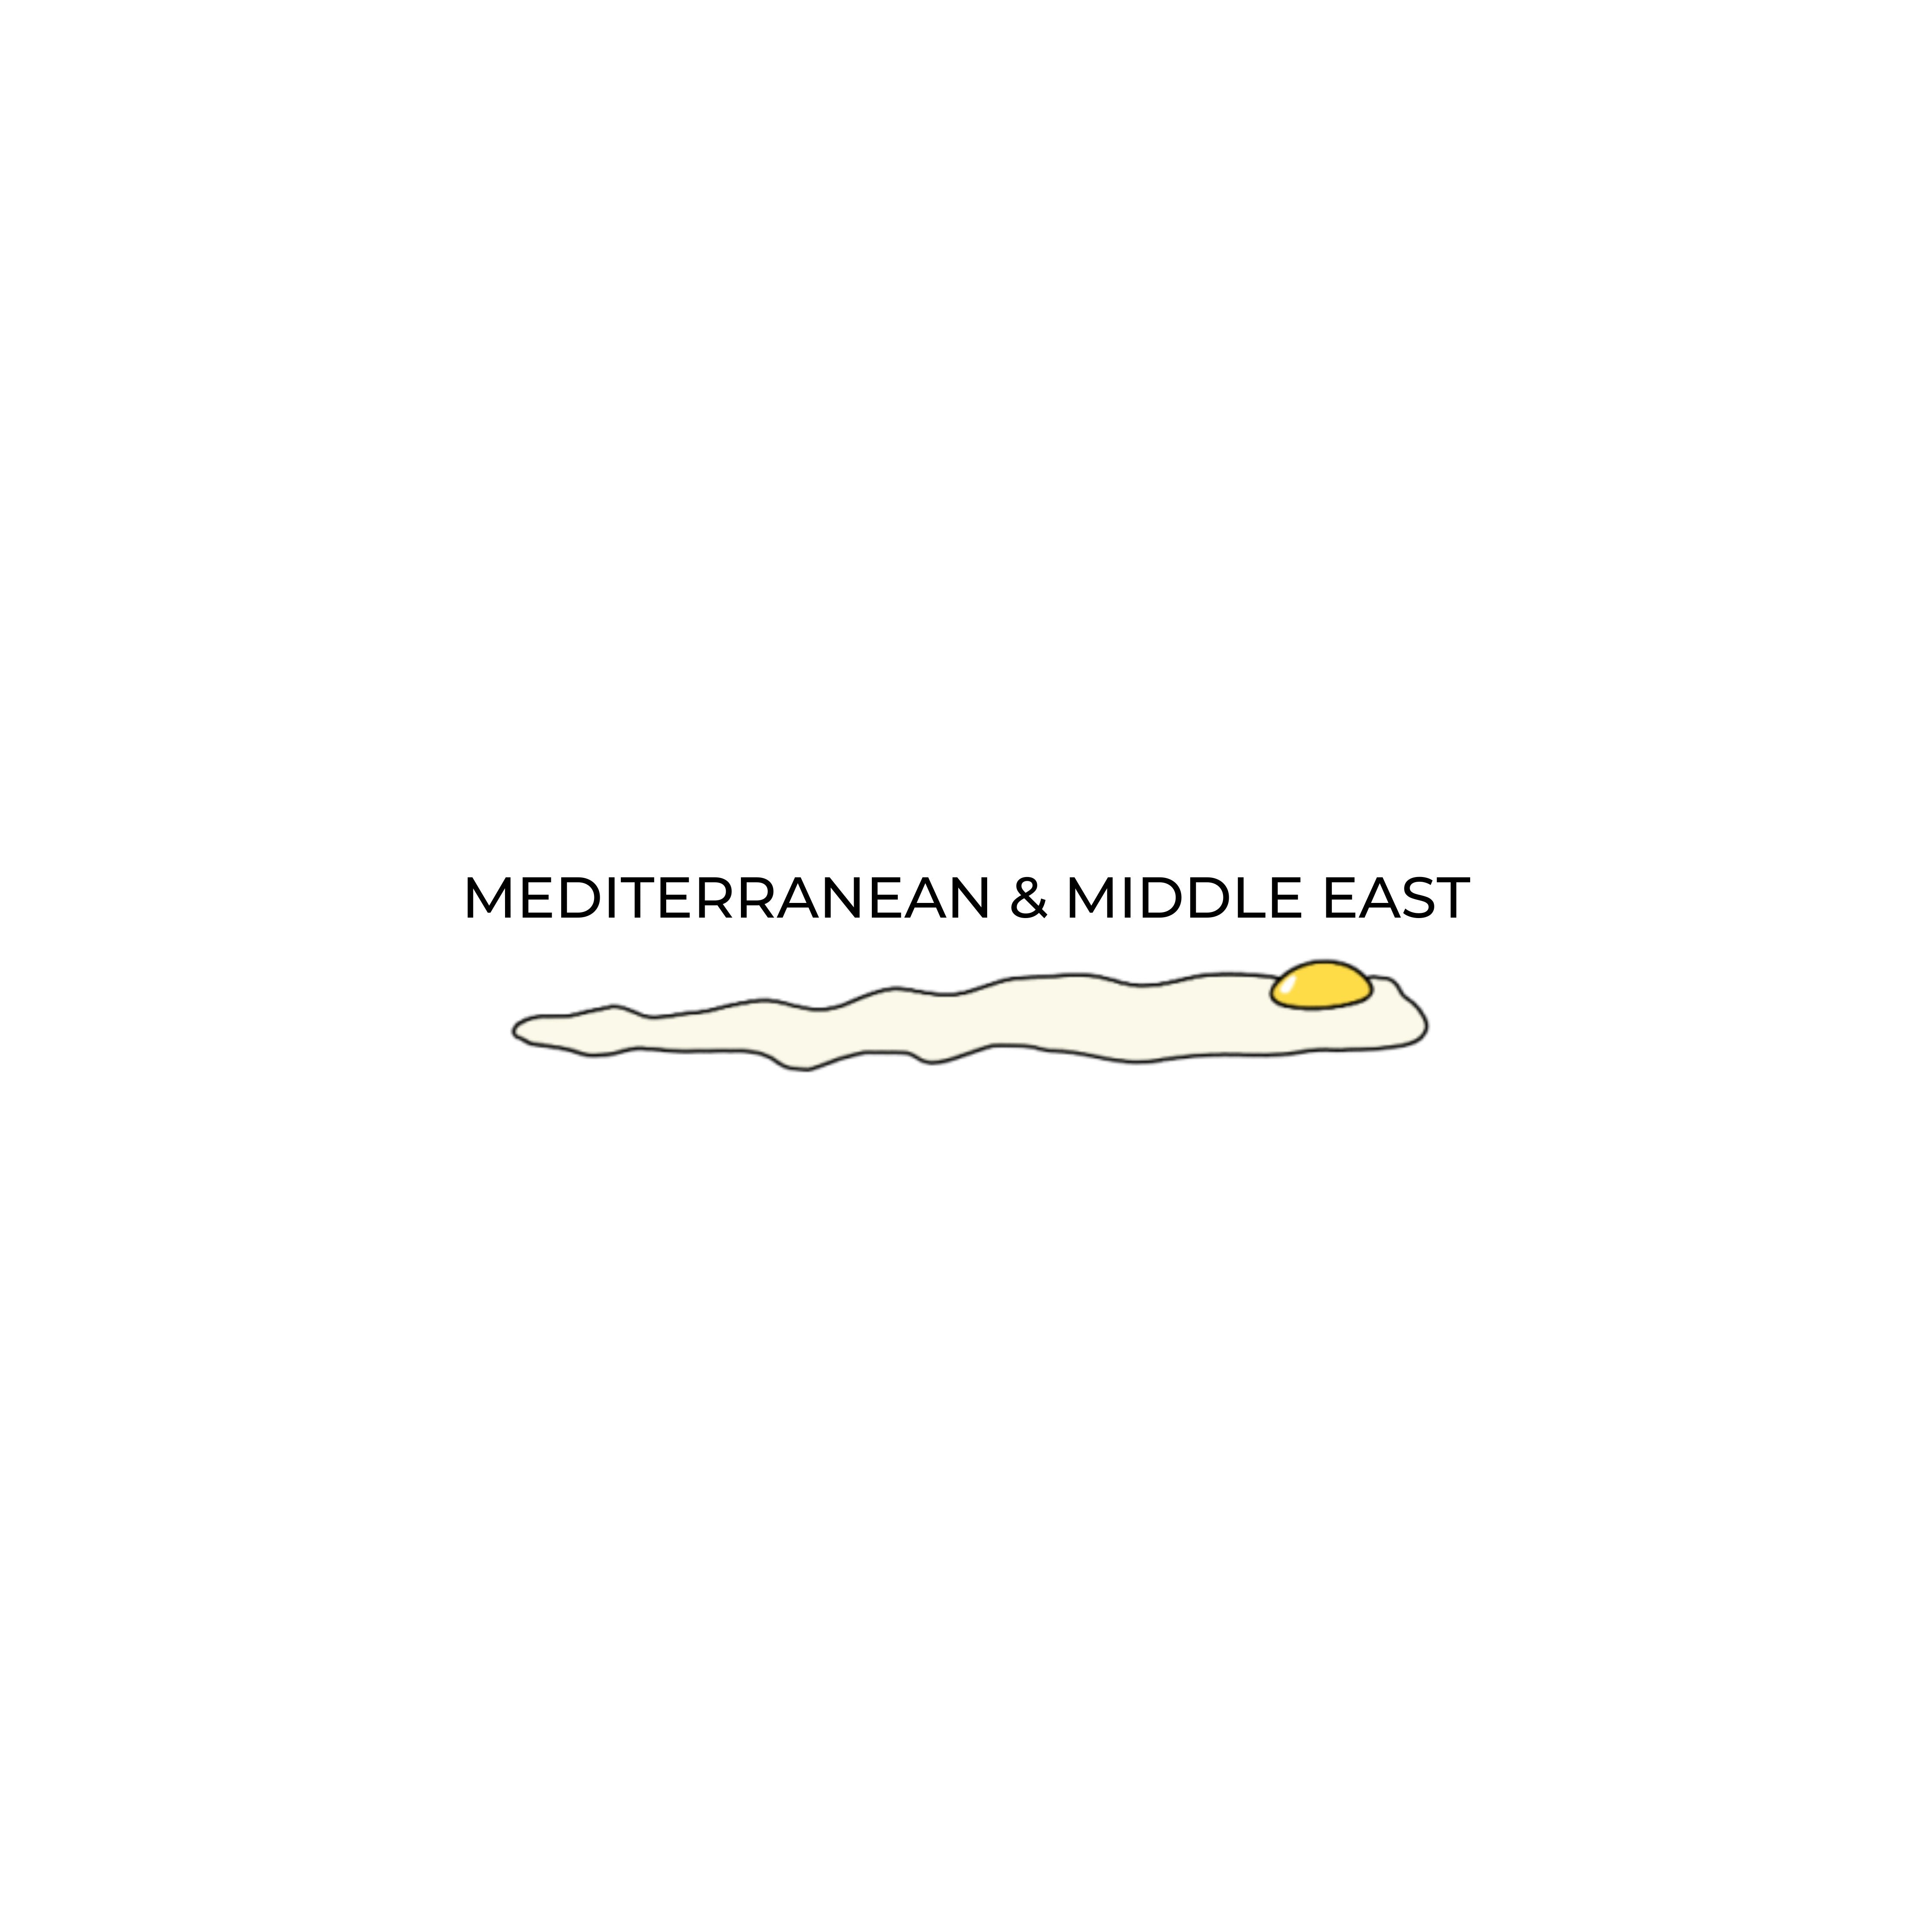 MEDITERRANEAN & MIDDLE EAST